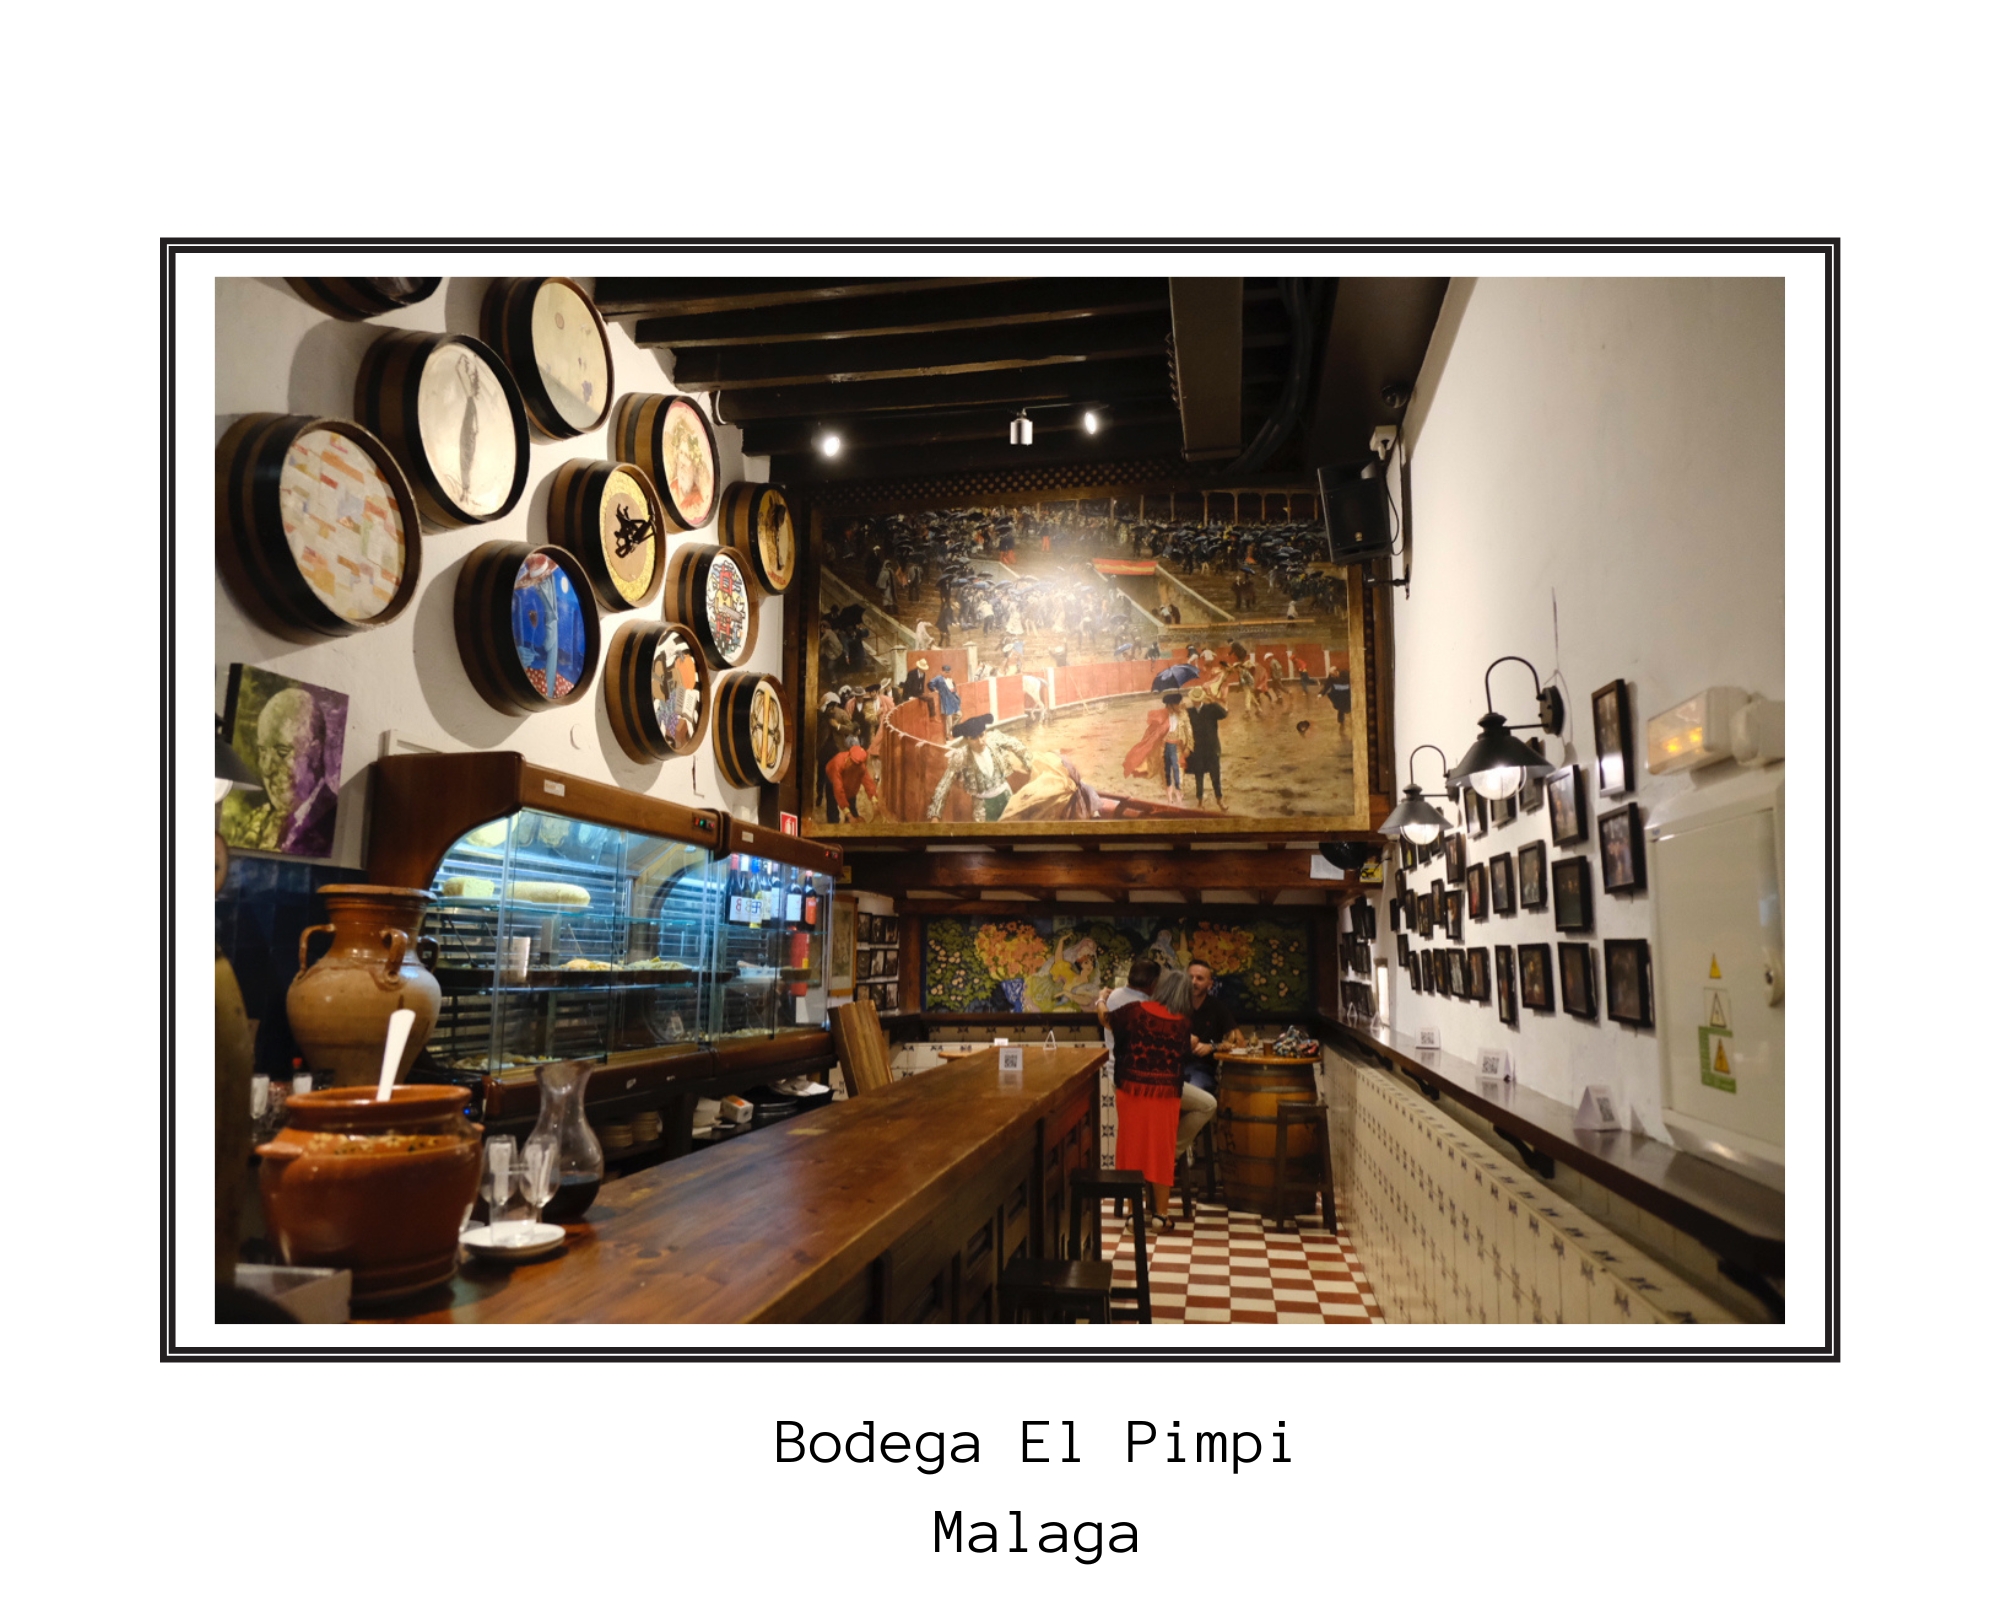 Bodega El Pimpi, Malaga...